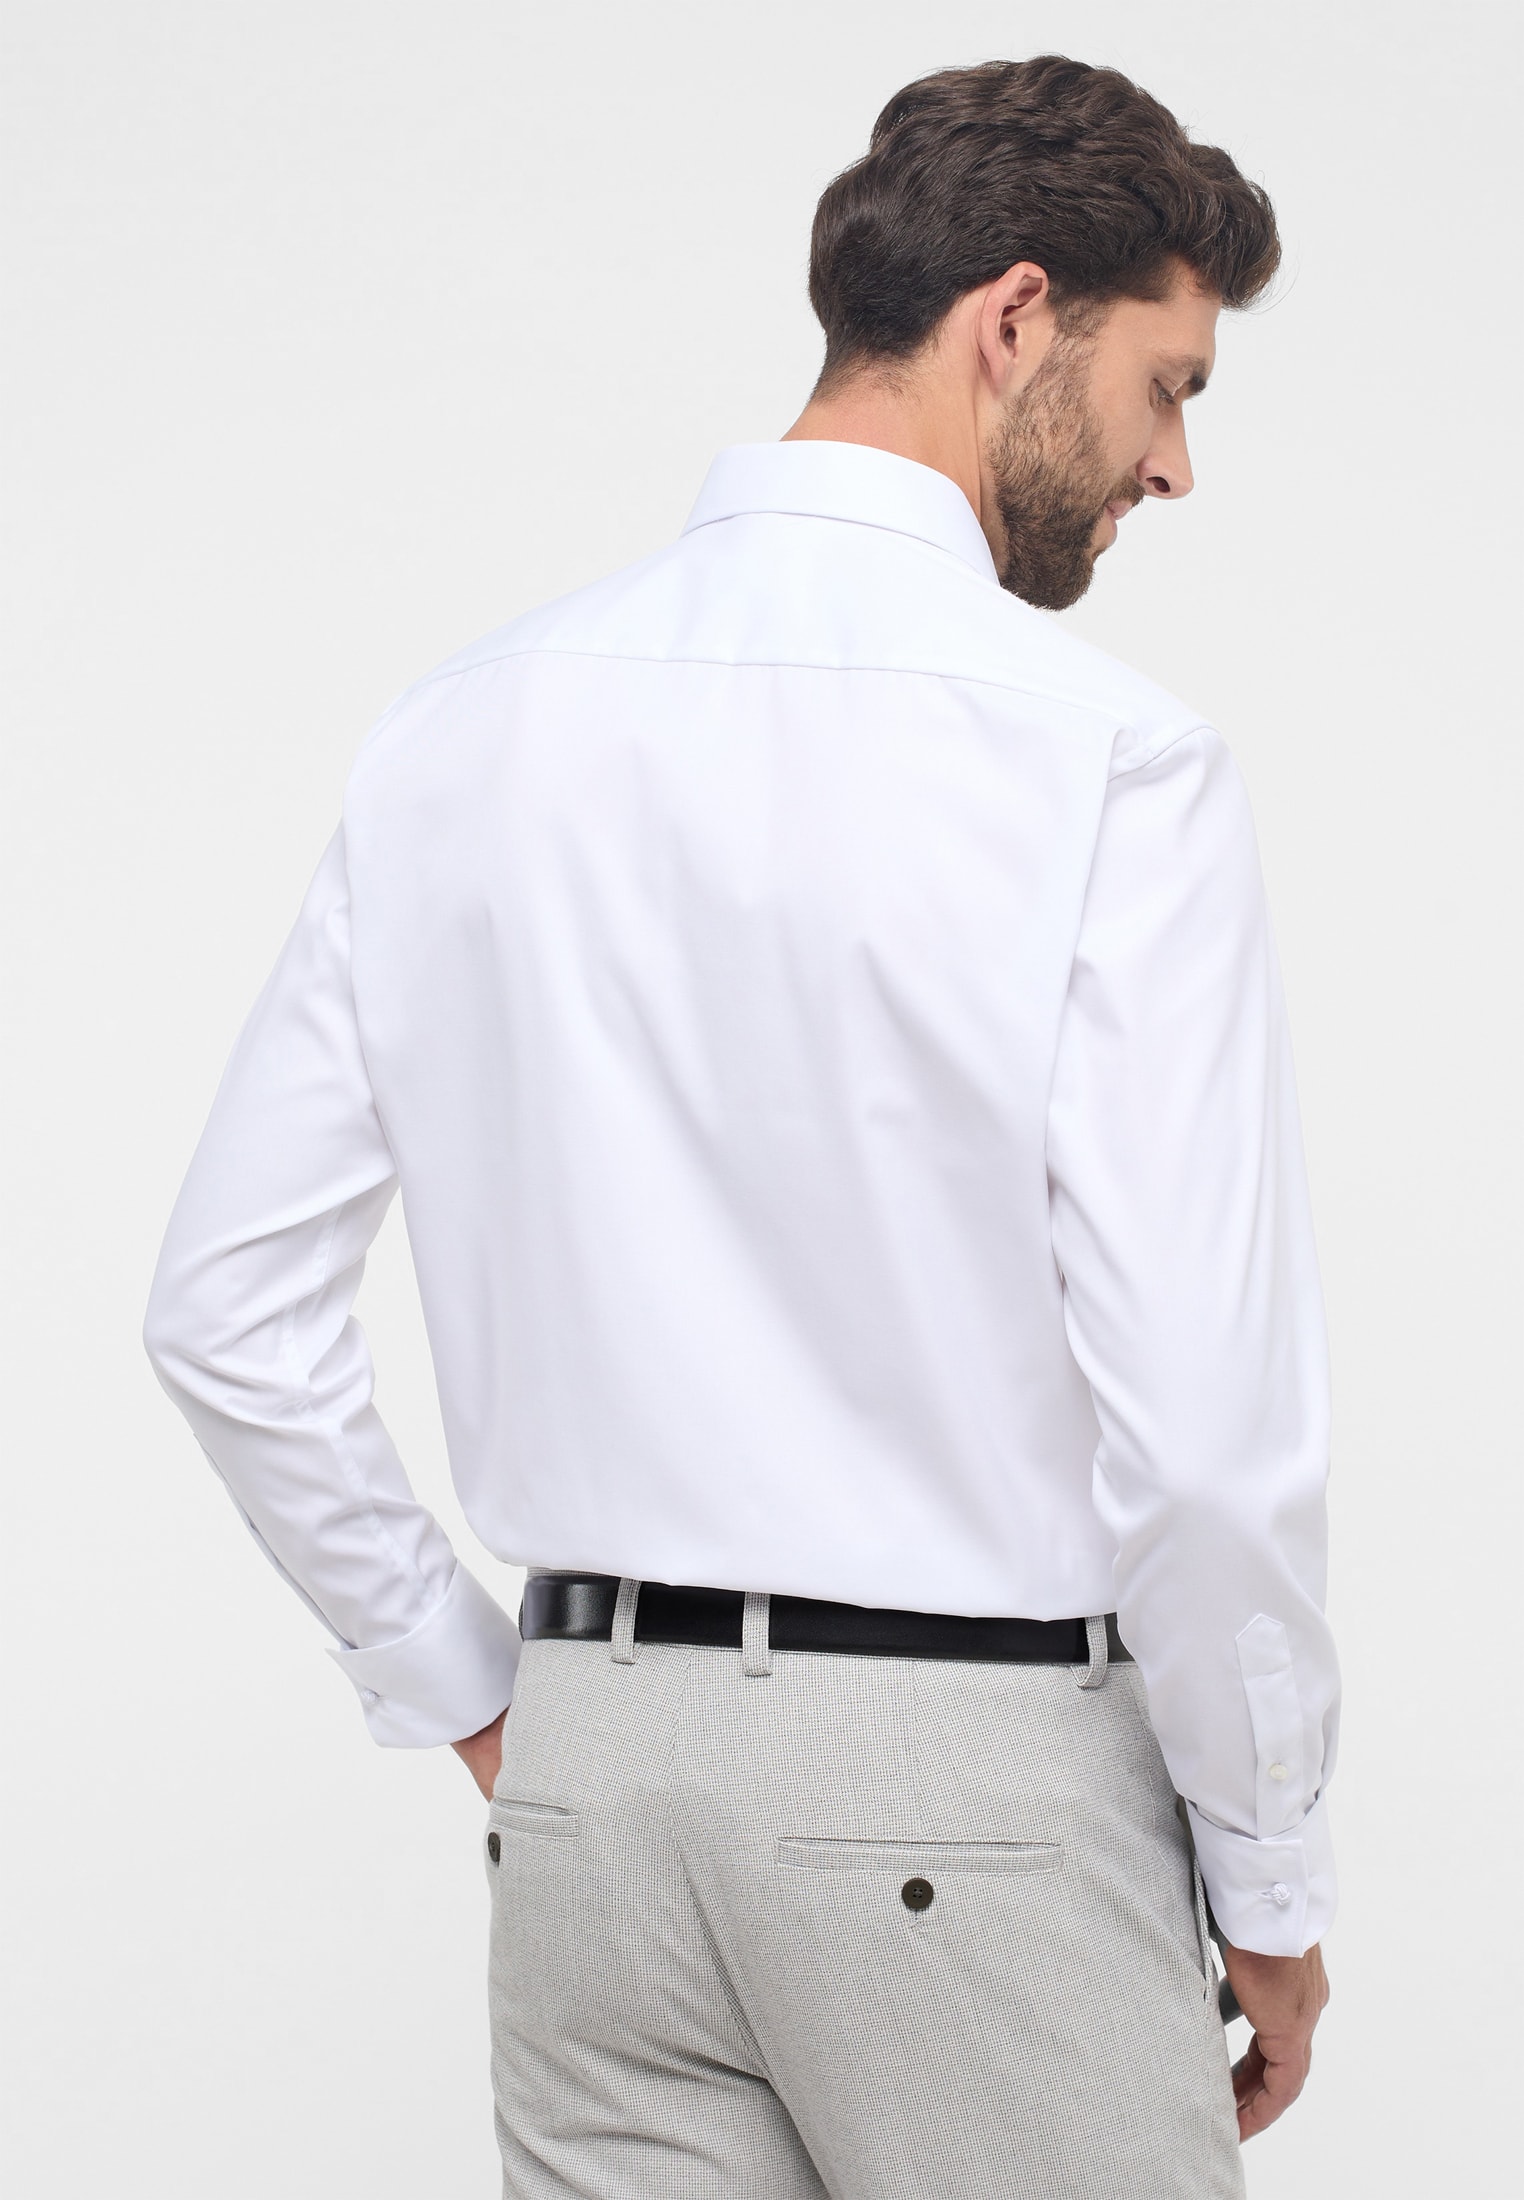 | 1SH05509-00-01-41-1/1 | in weiß Cover COMFORT 41 Shirt unifarben Langarm | | FIT weiß